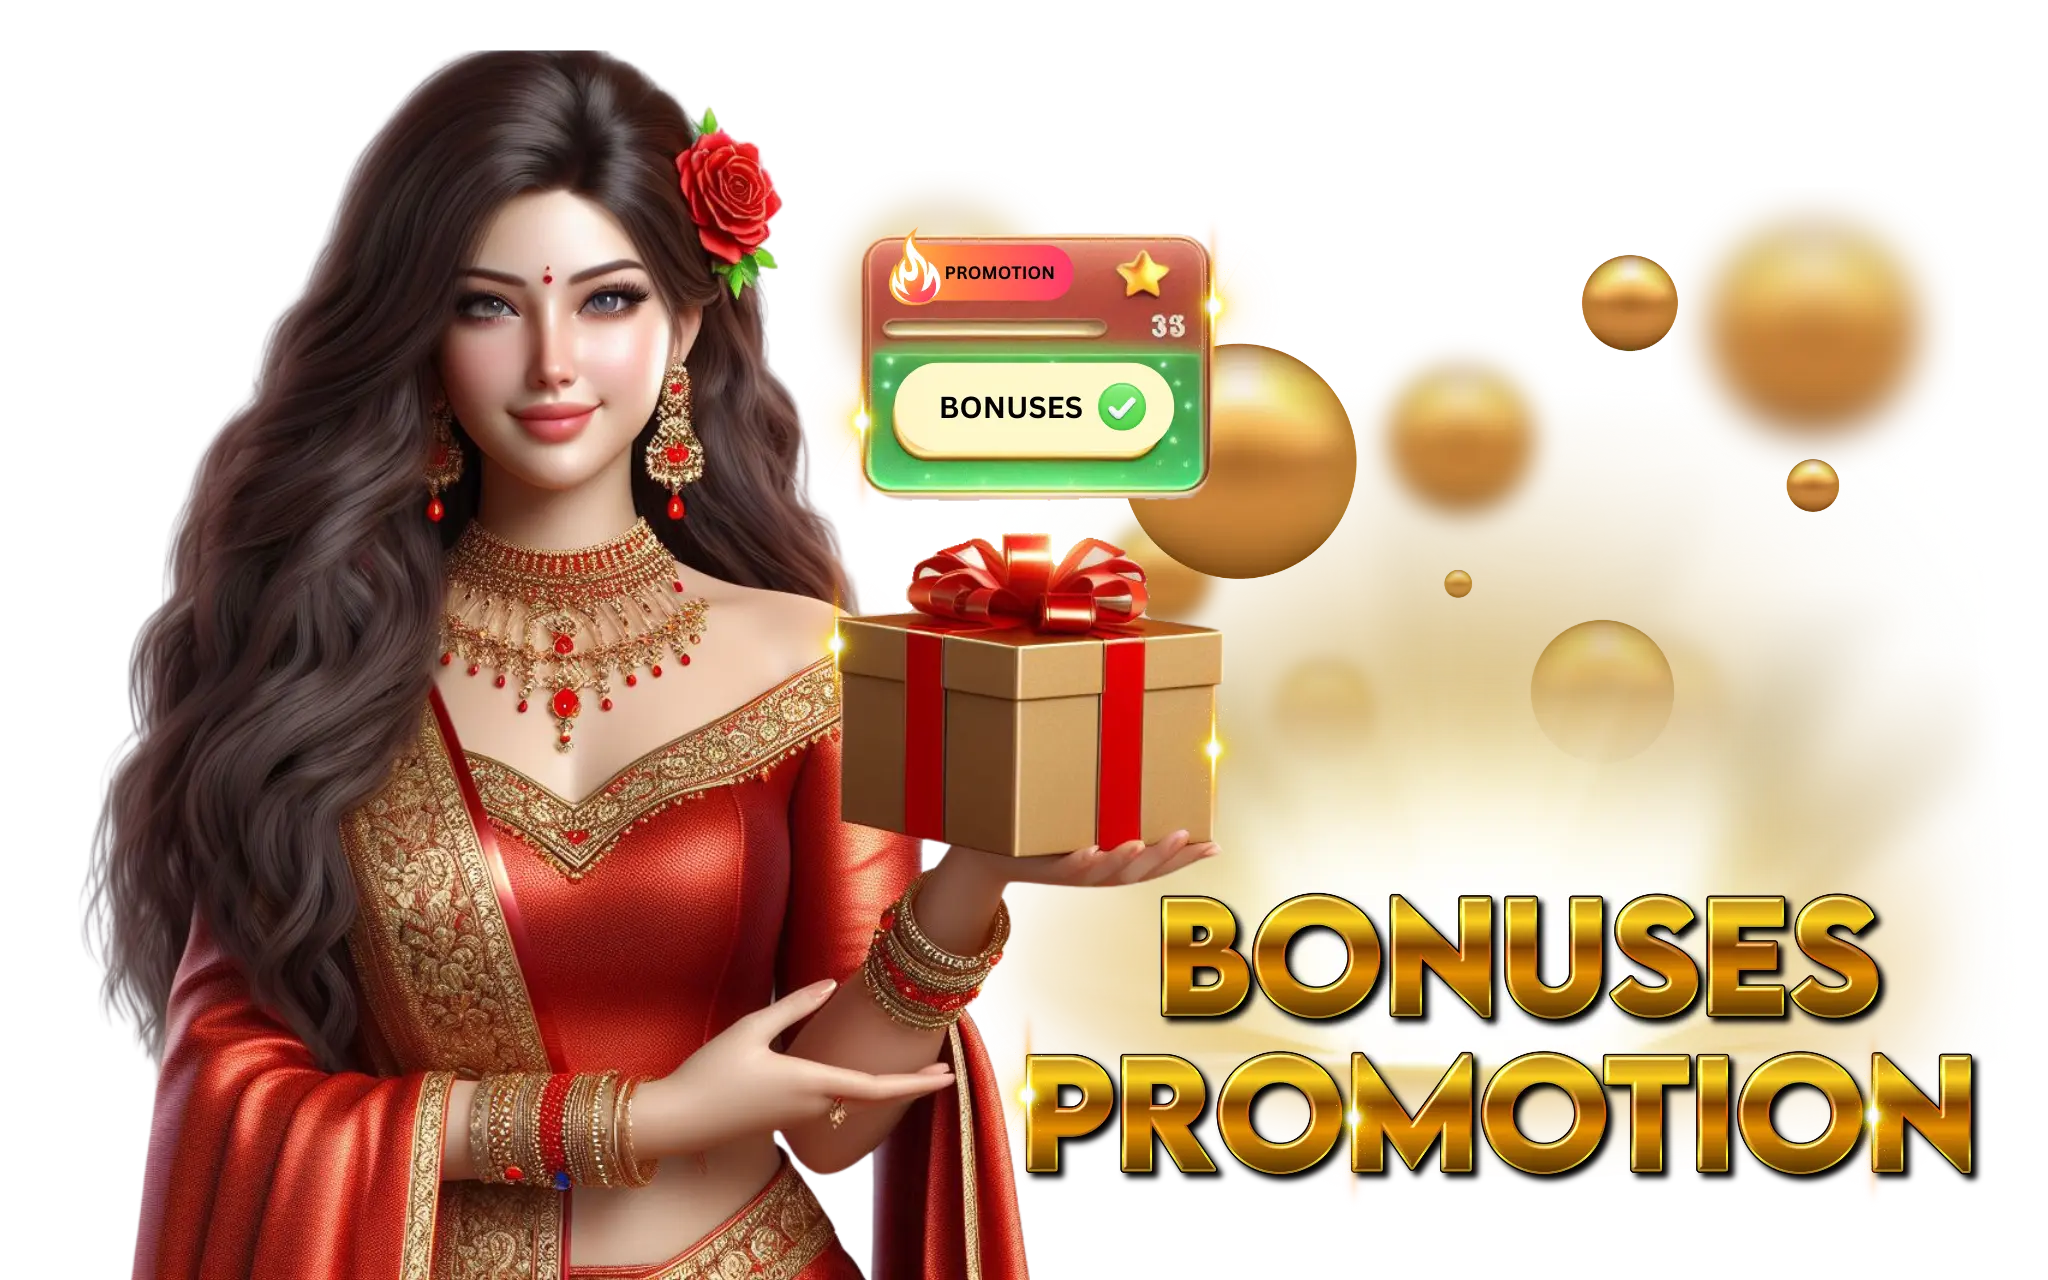 Bonuses Promotion